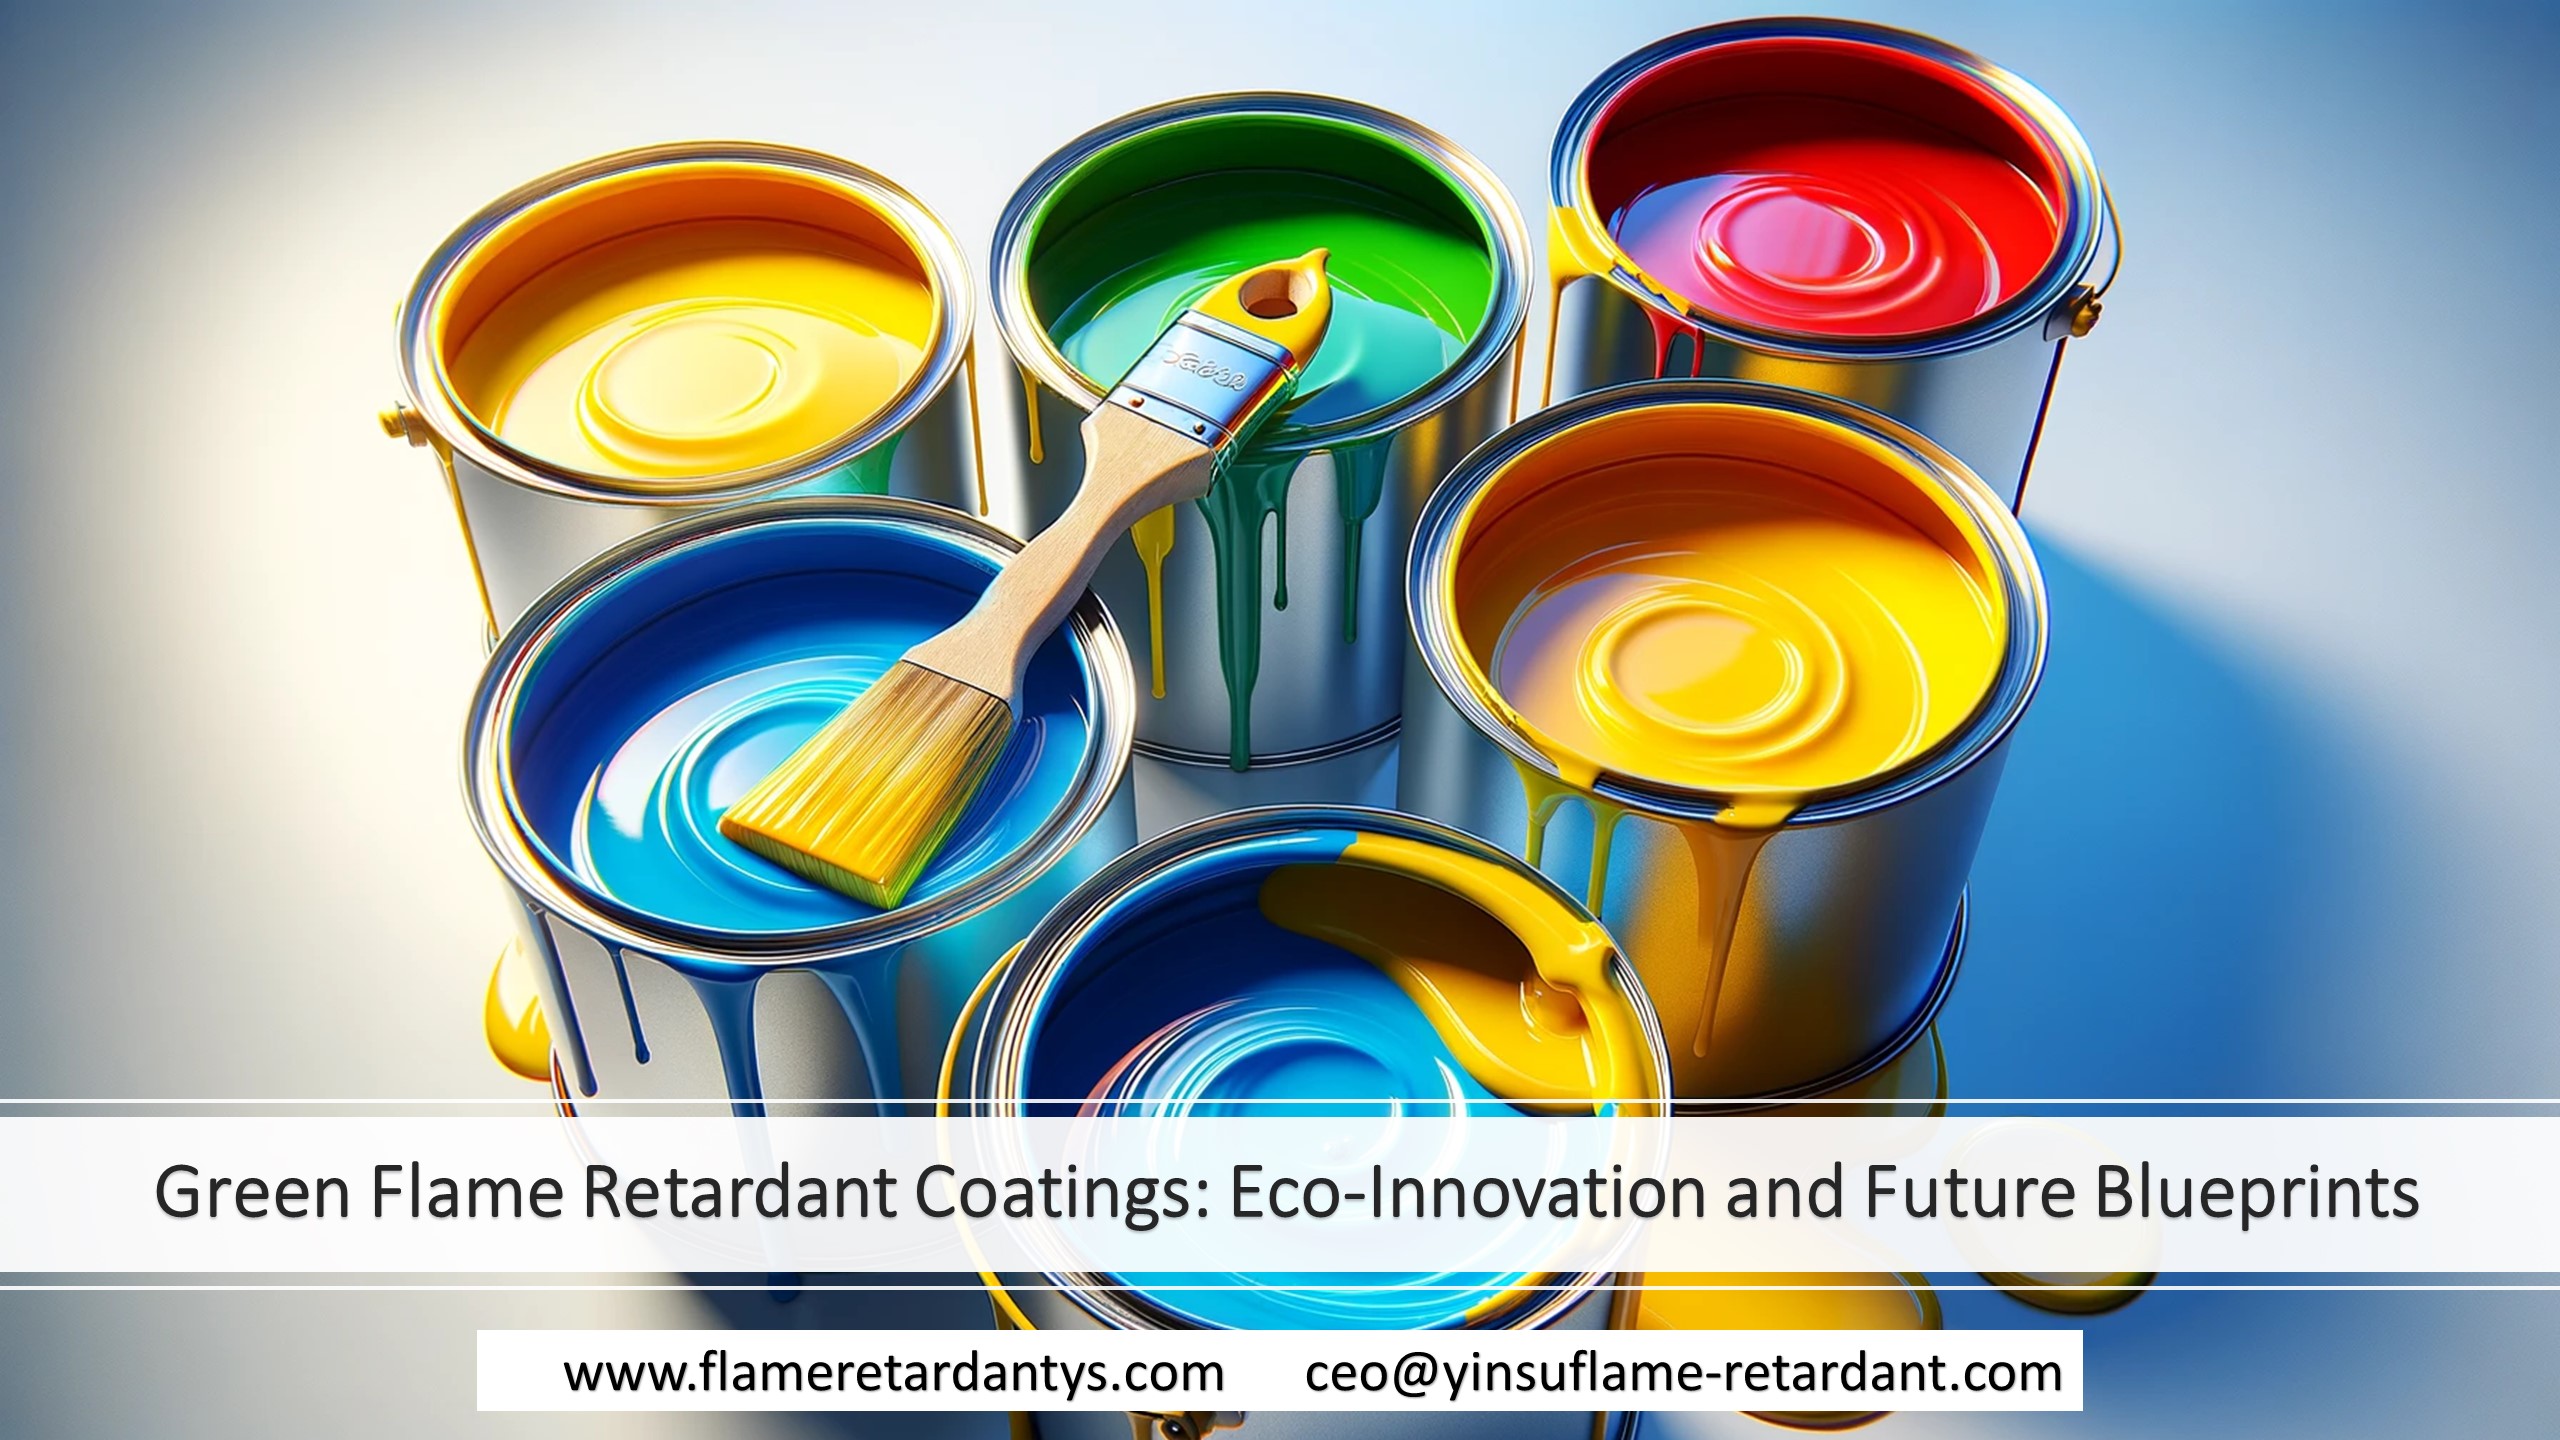 Green Flame Retardant Coatings: Eco-Innovation and Future Blueprints